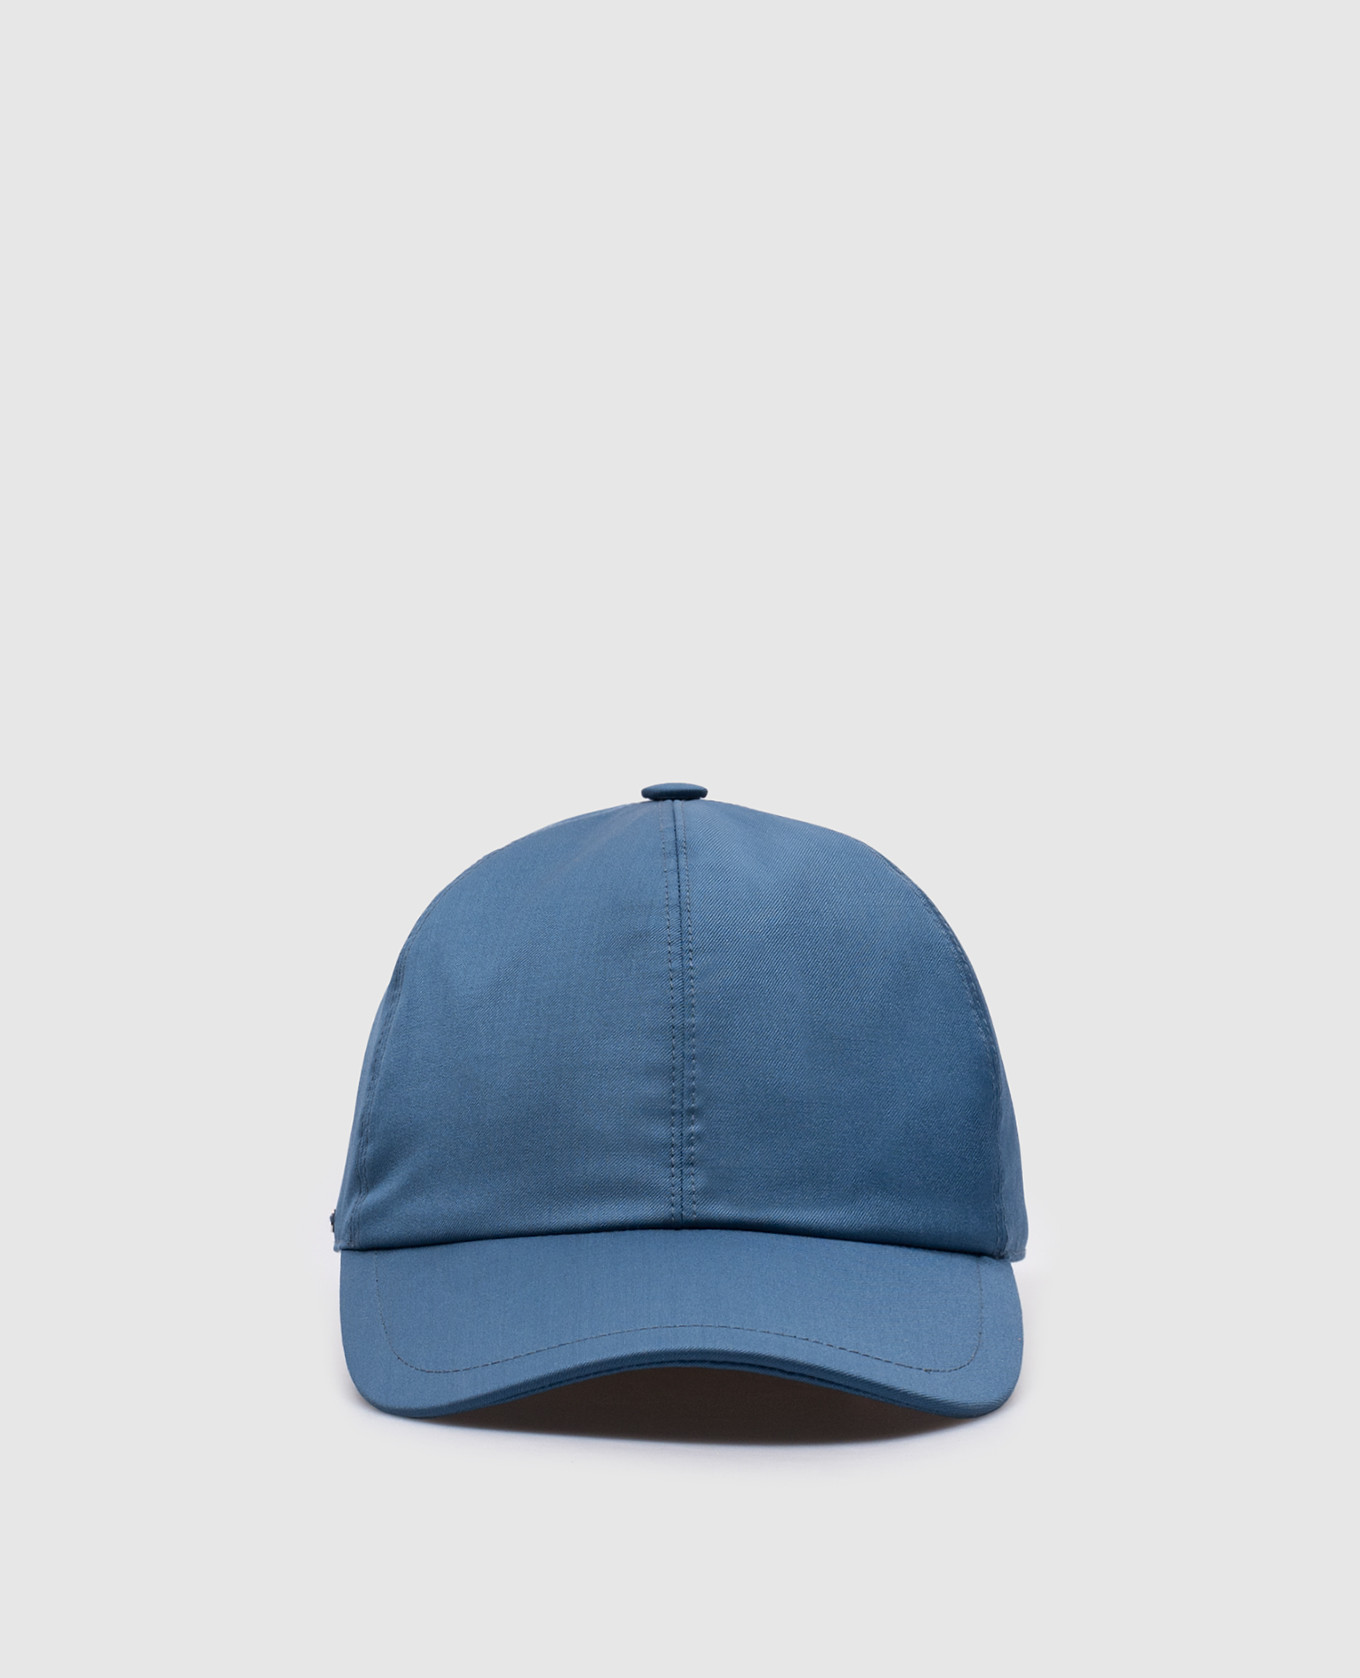 Blue cap made of wool